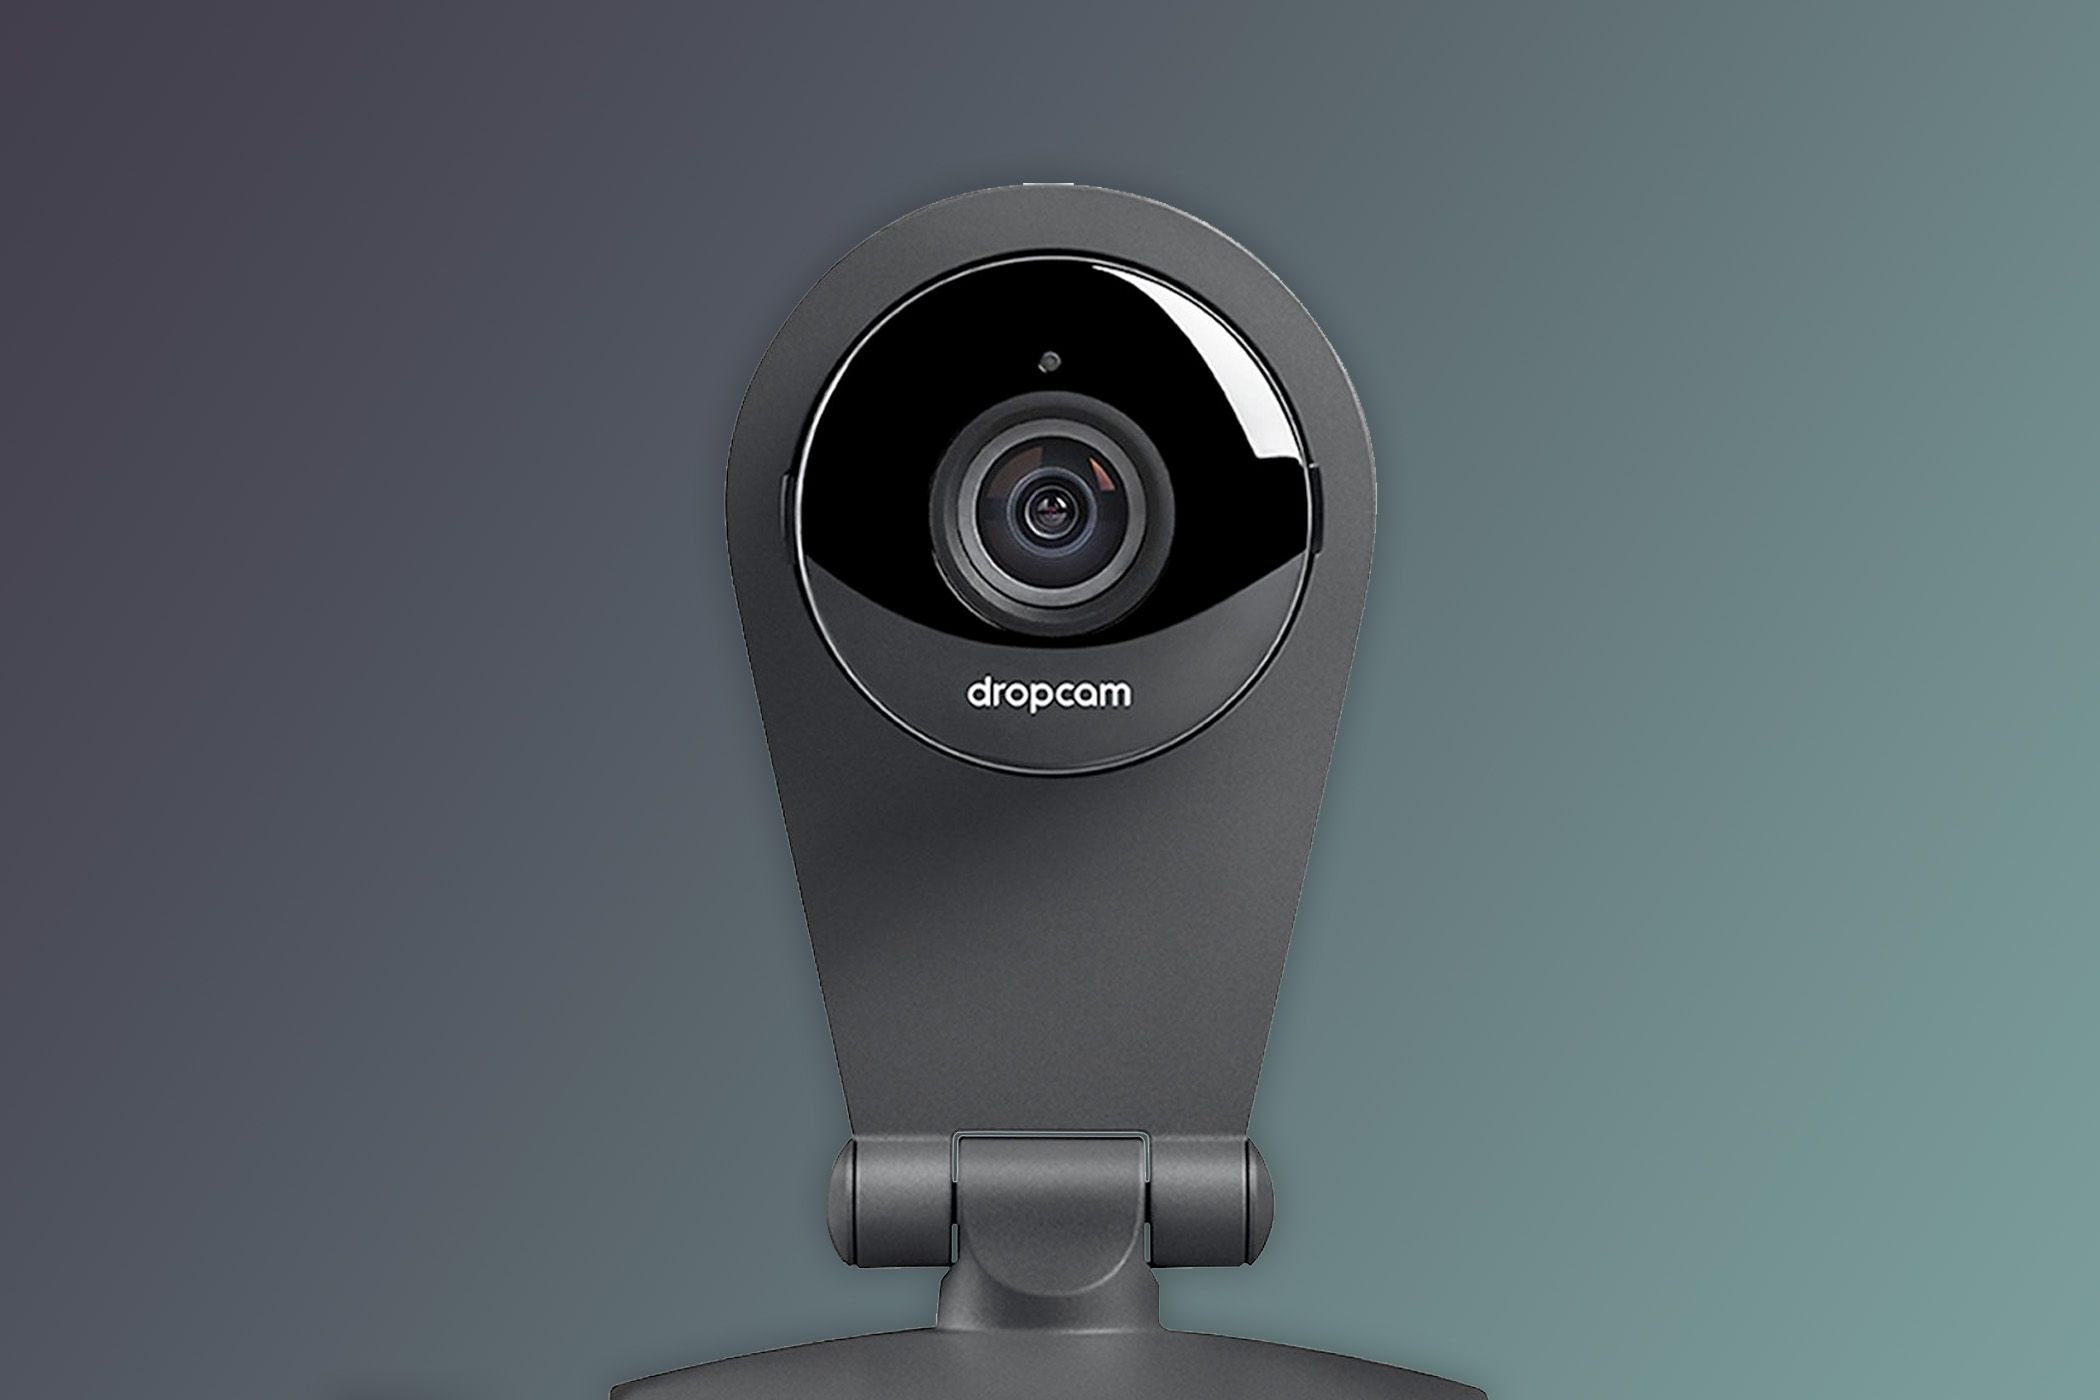 Black Dropcam Pro home security camera